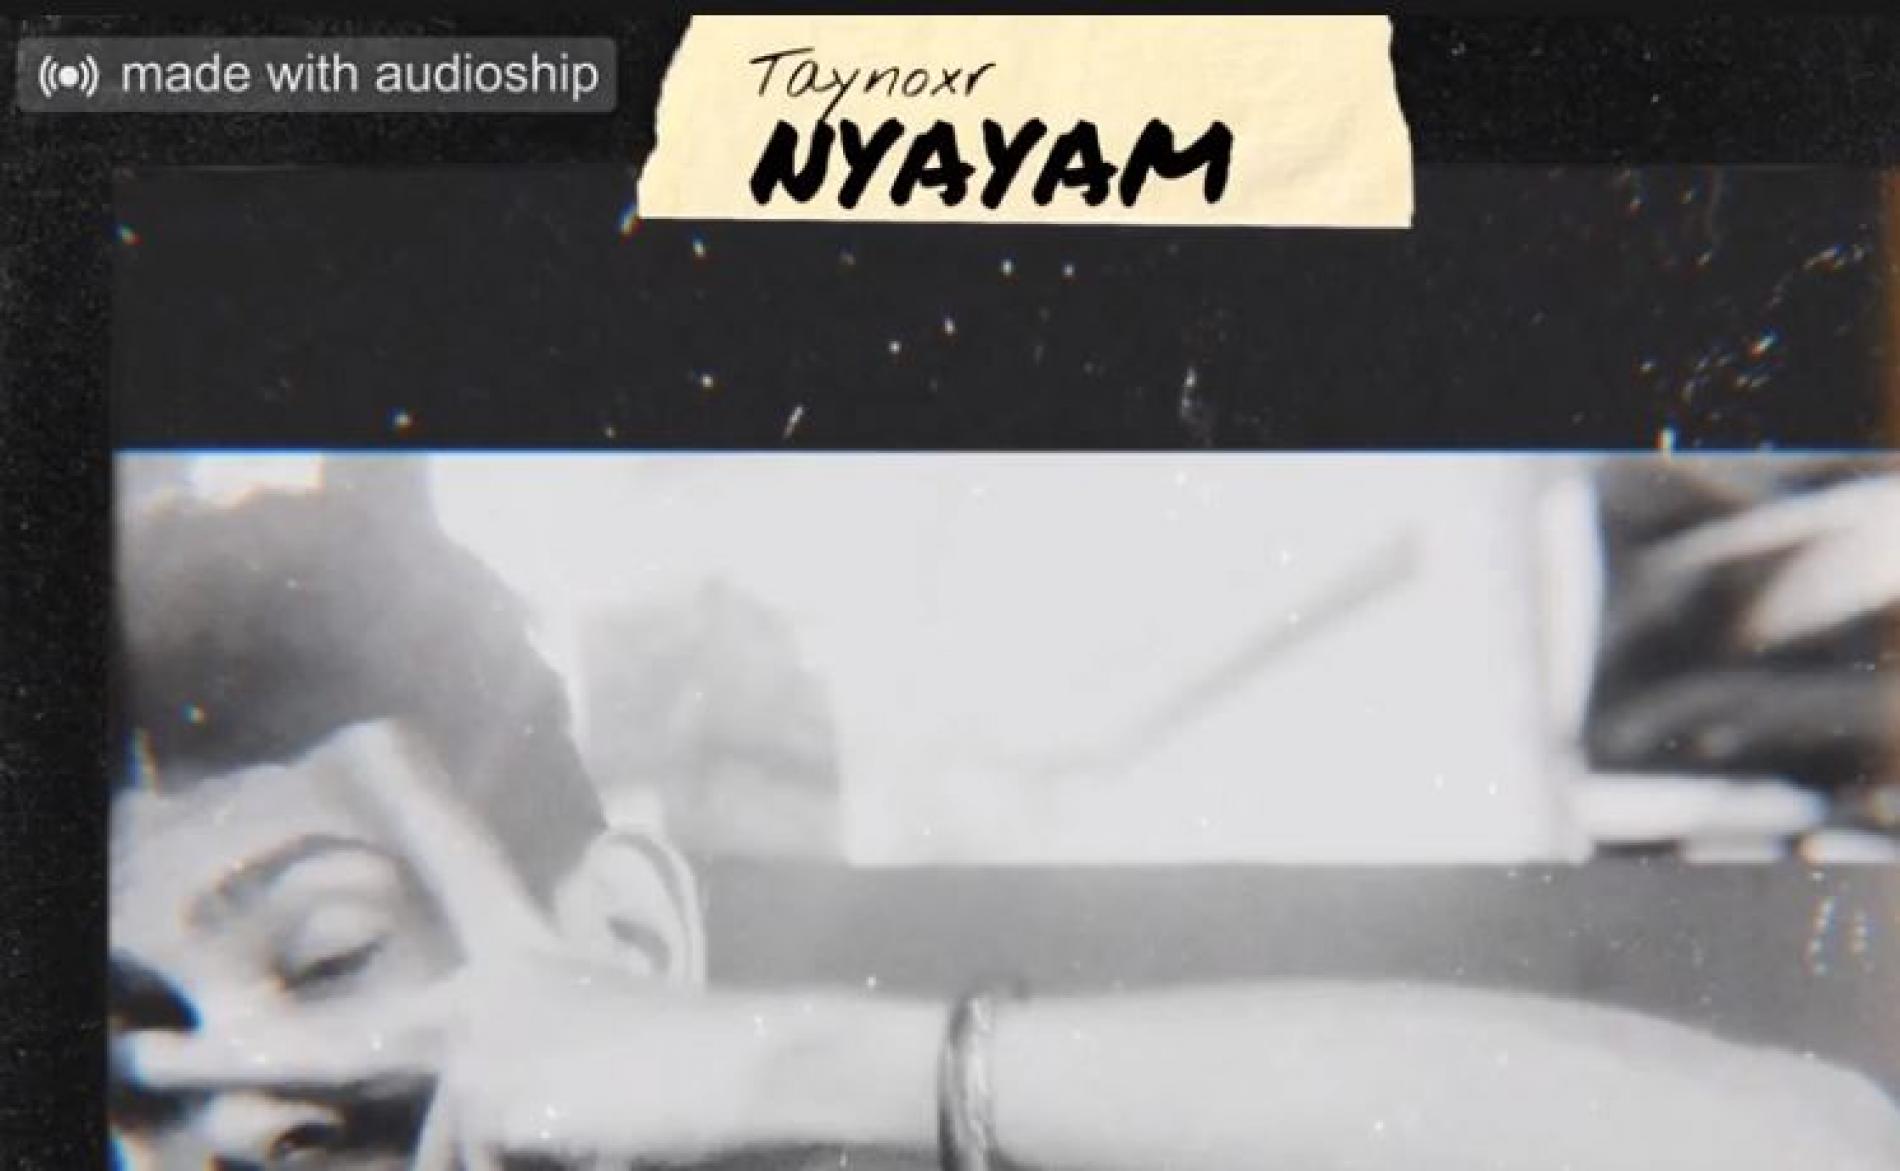 New Music : Taynoxr -nyayam